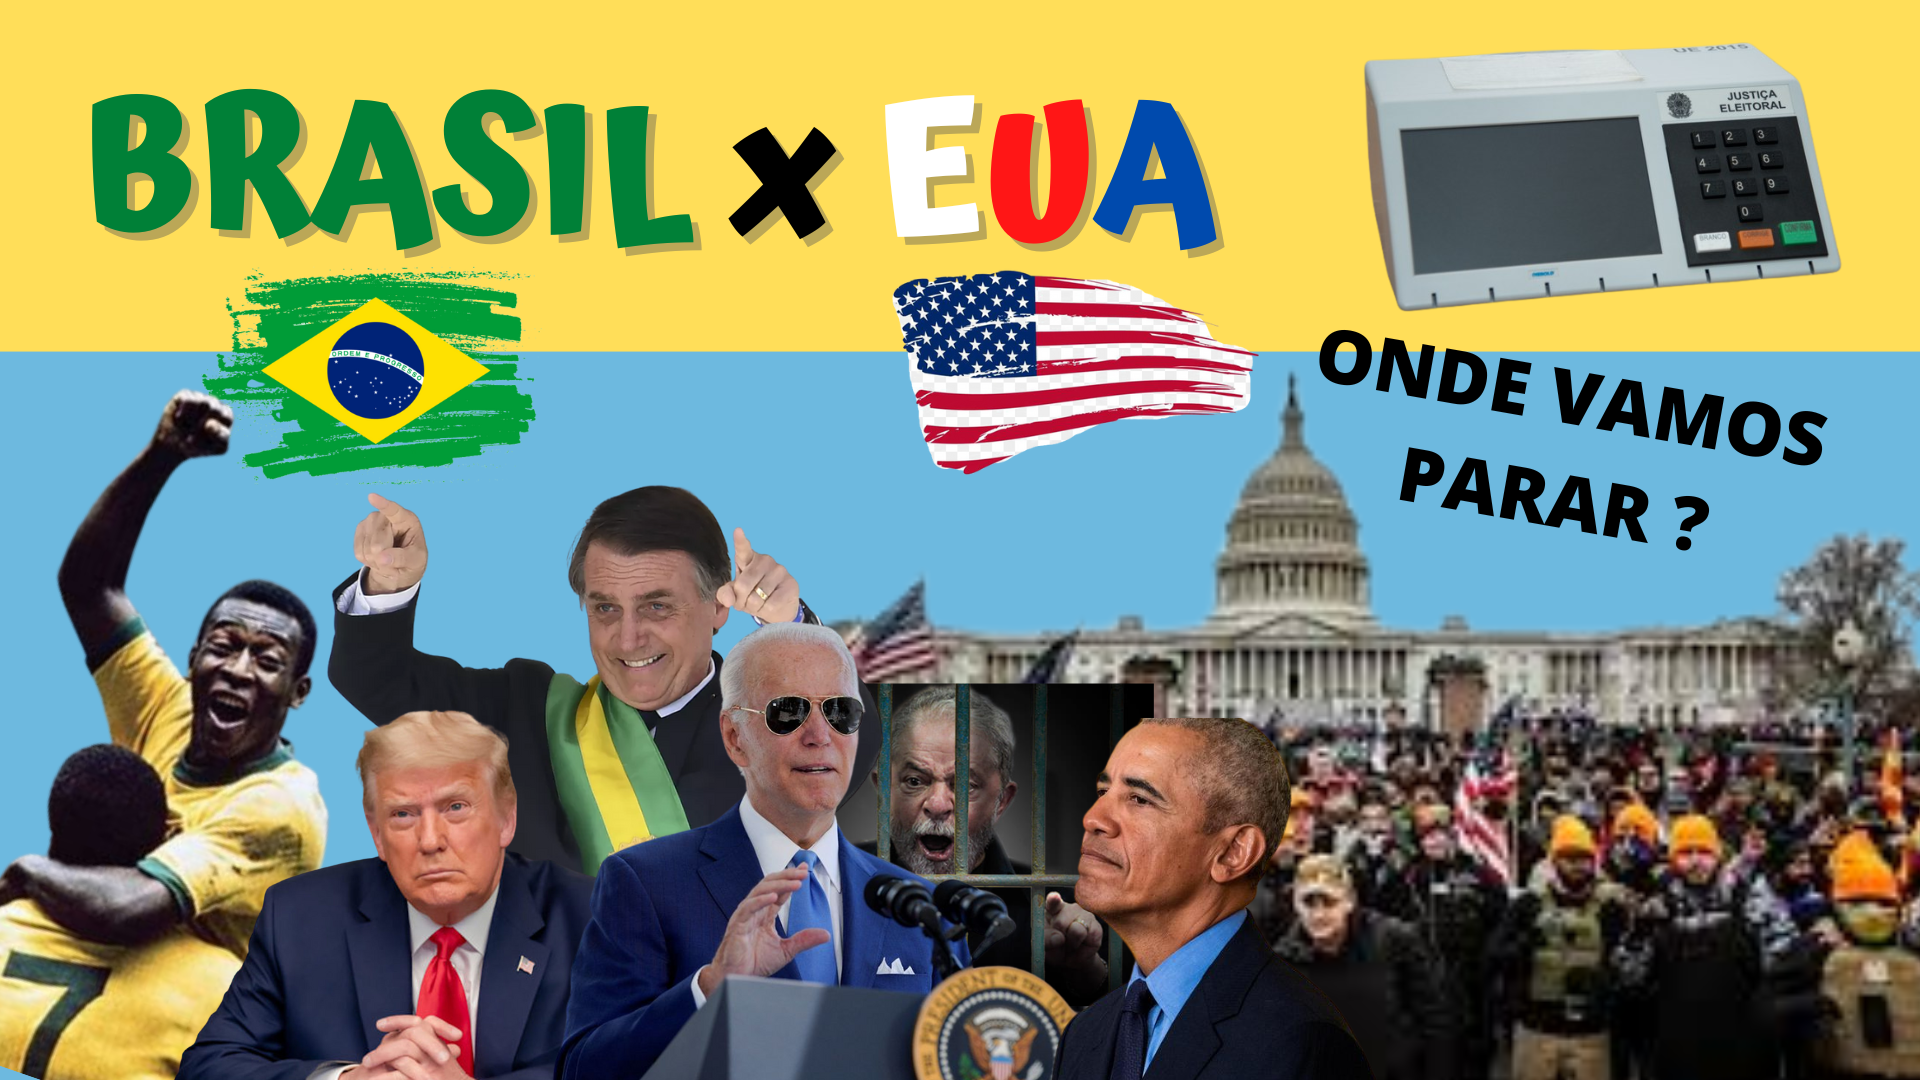 BRASIL x EUA